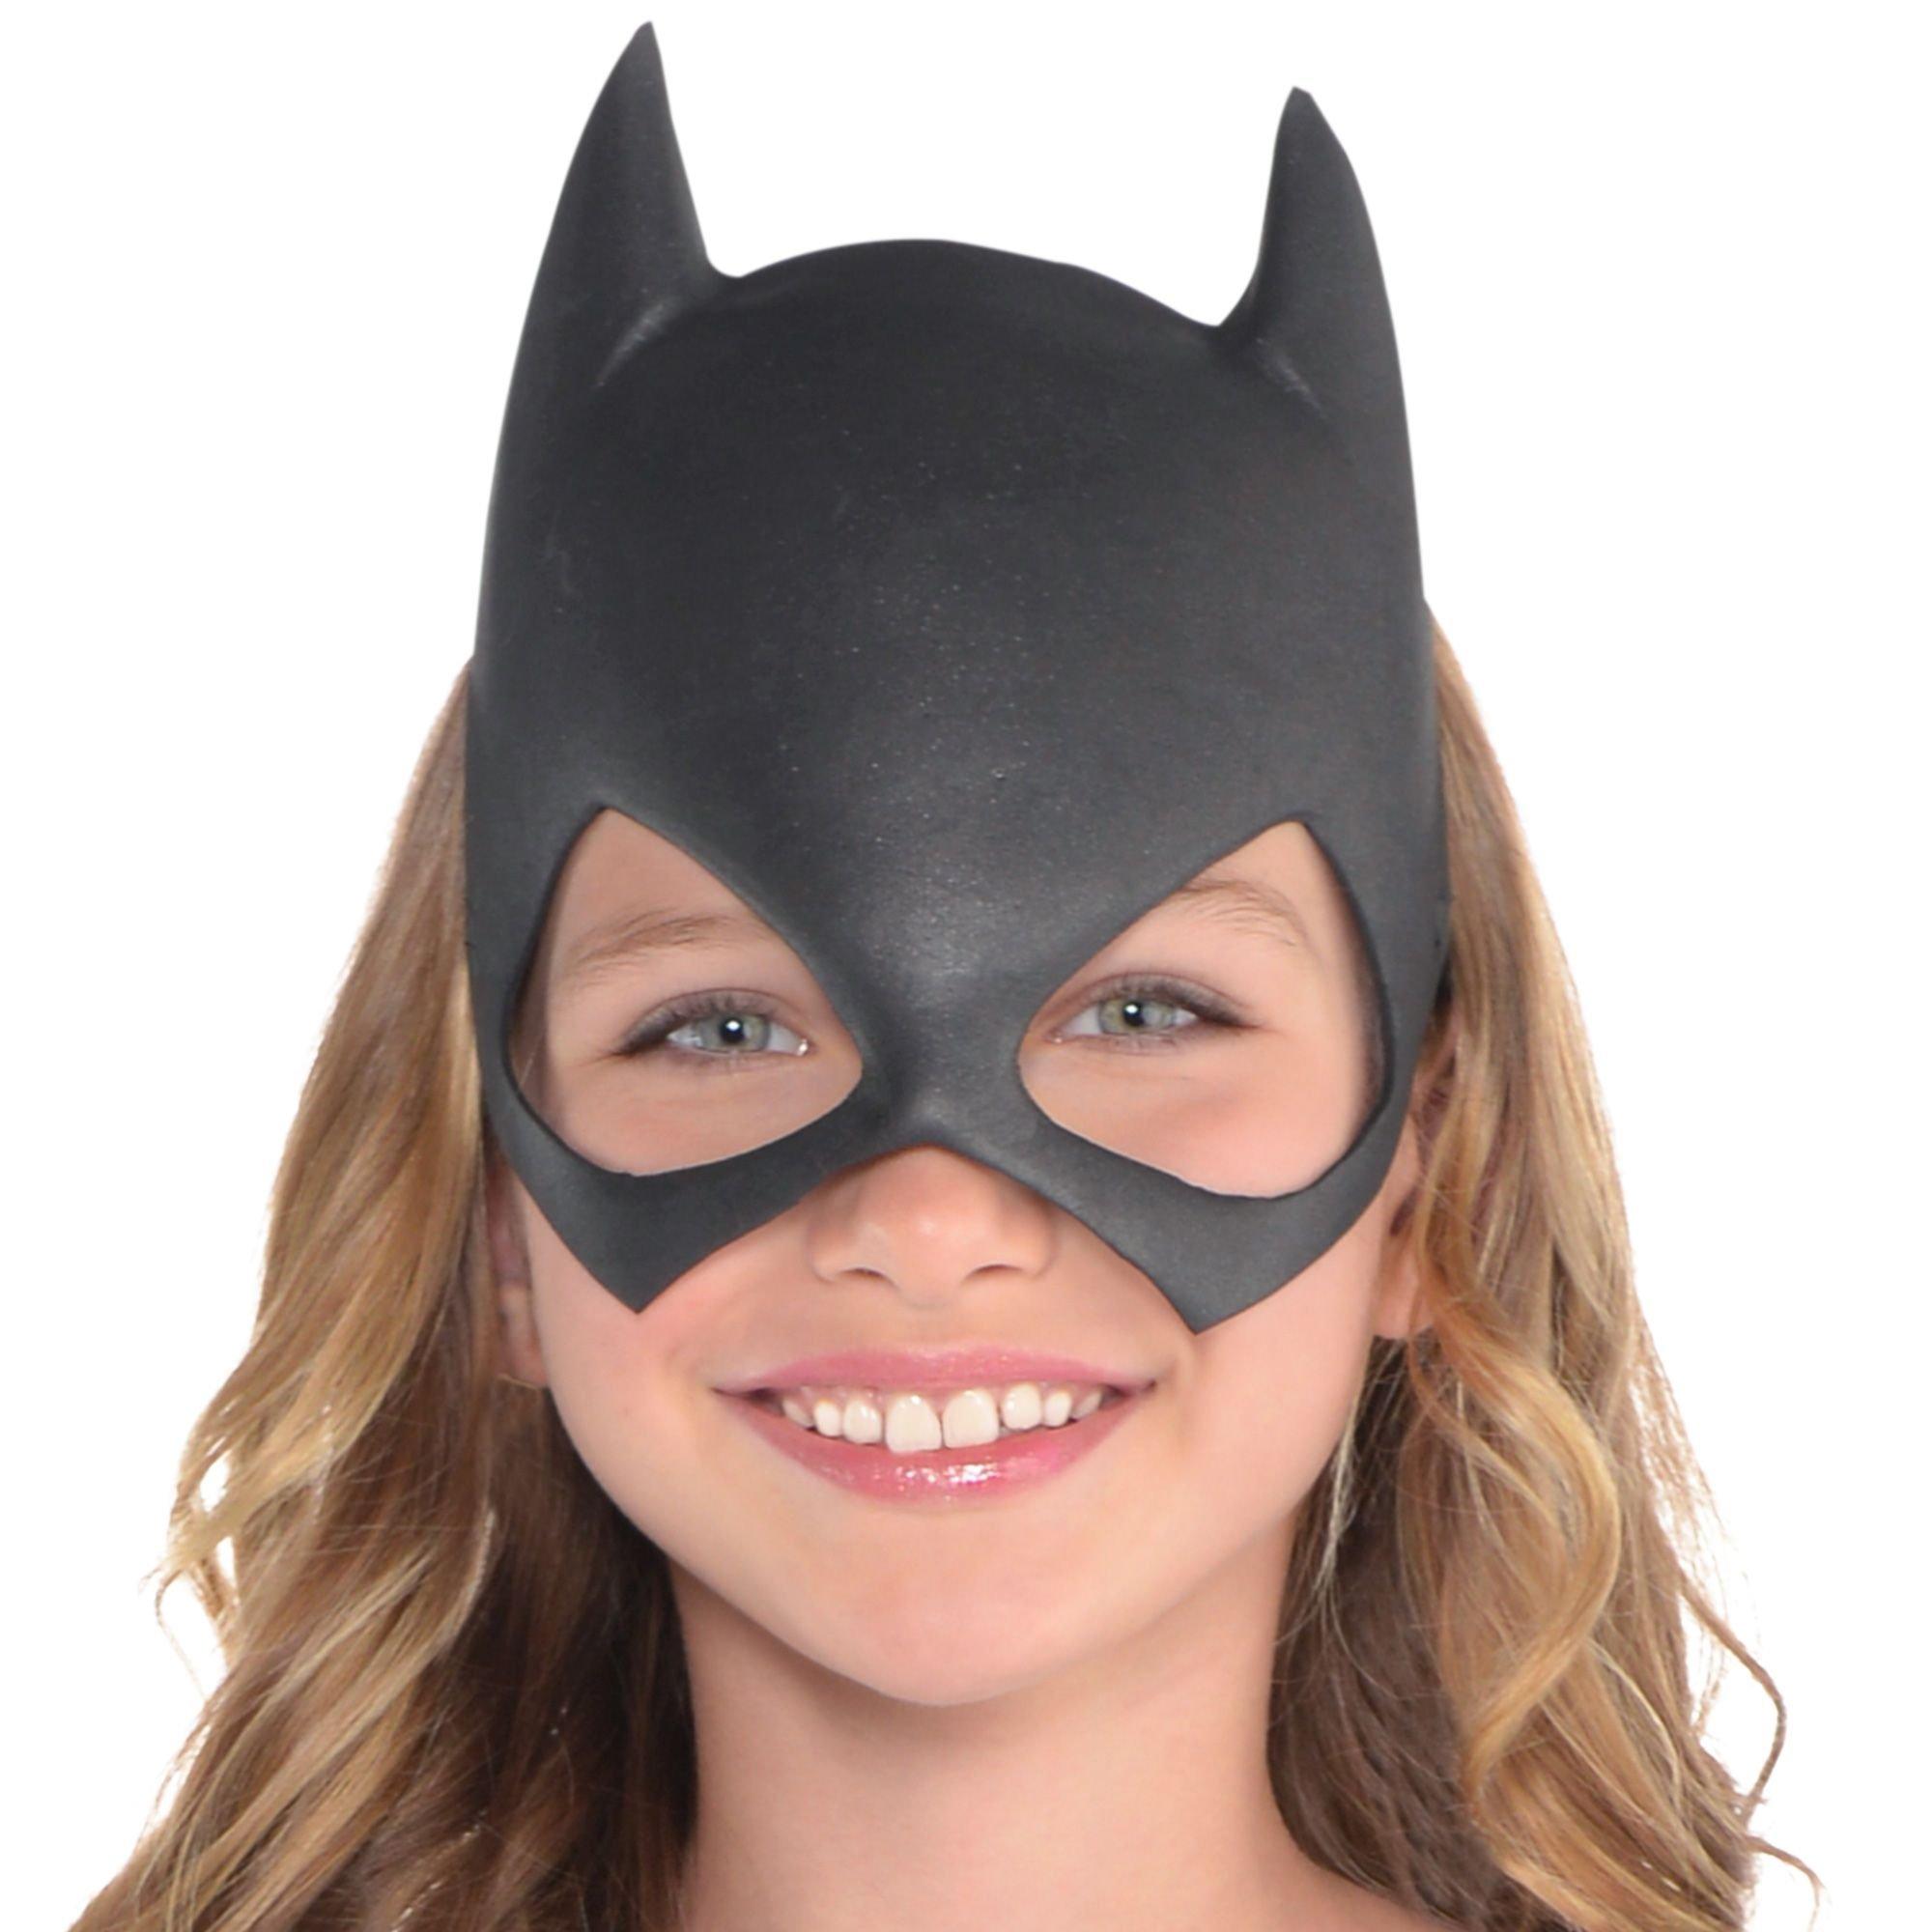 batman costume for teenage girls